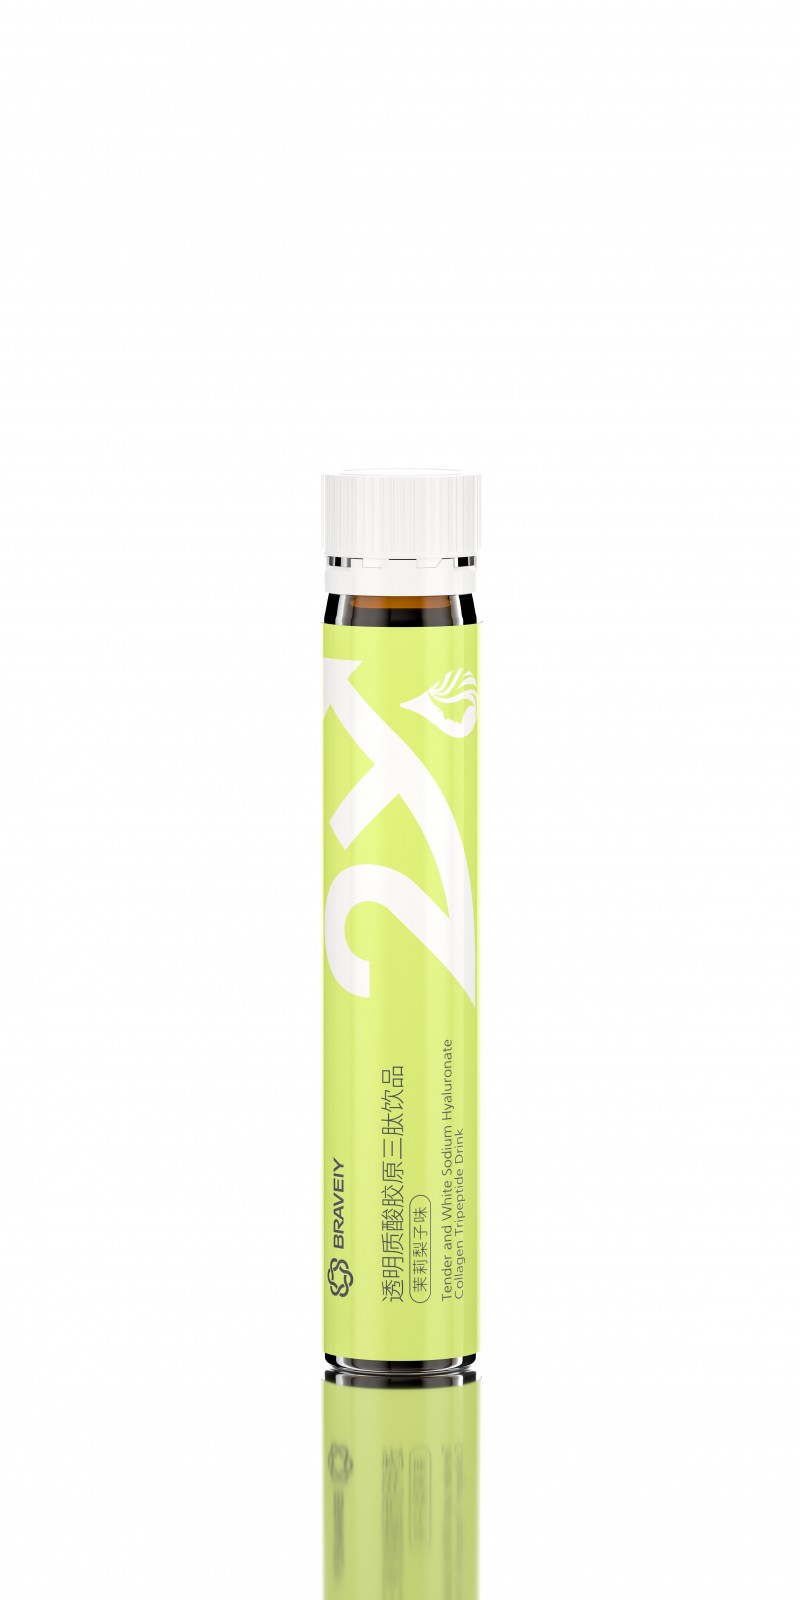 Oral Water Light Needle - Hyaluronic Acid Collagen Tripeptide Drink (Jasmine pear flavor)